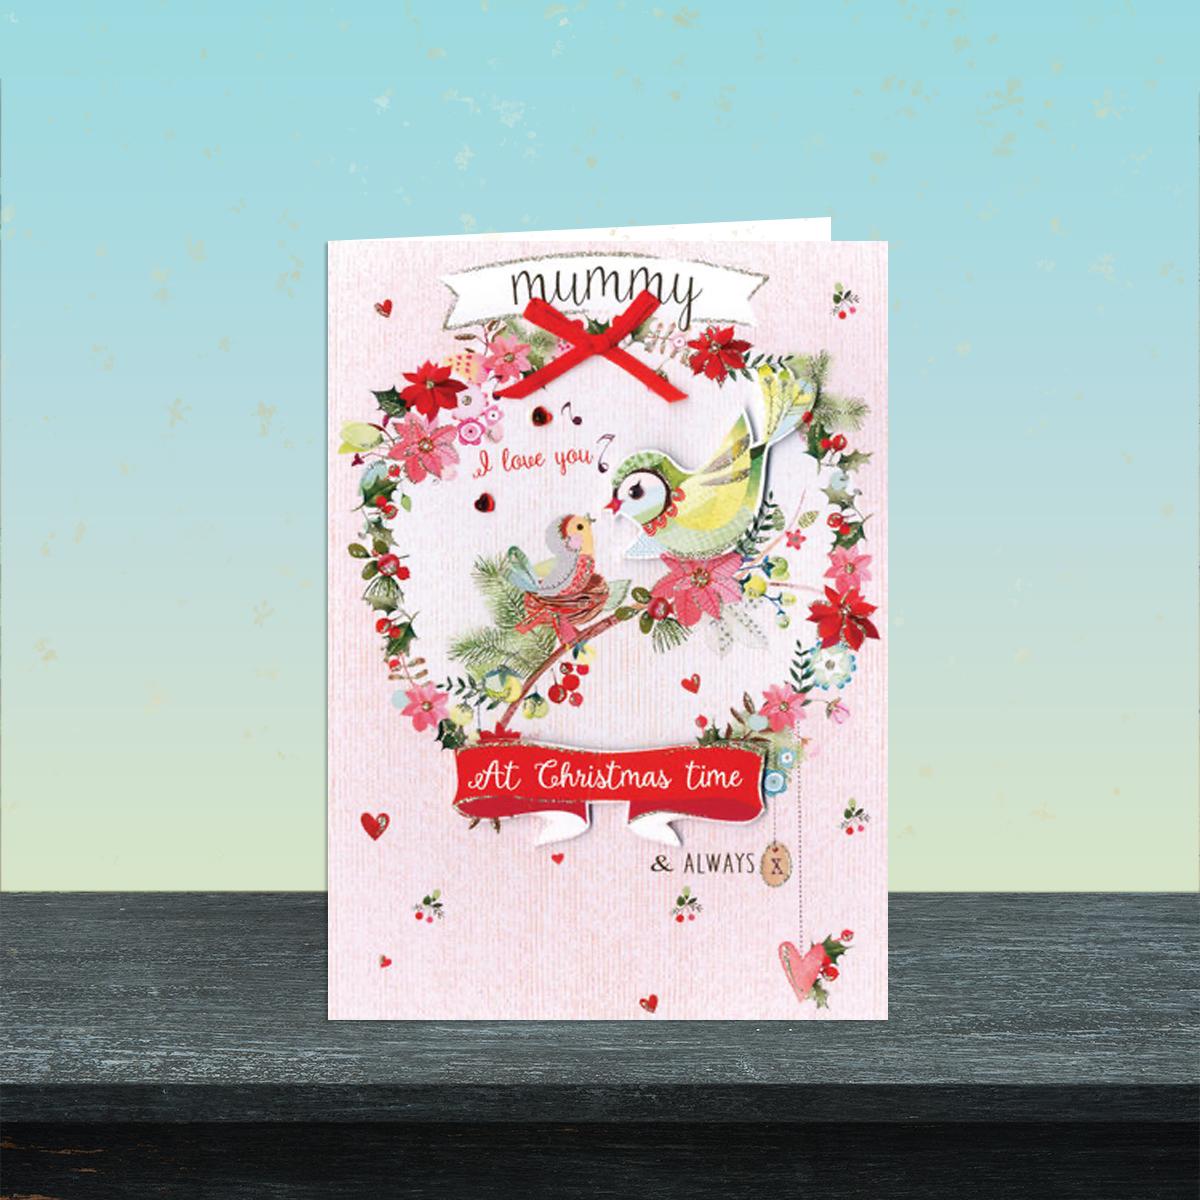 Mummy Christmas Card Alongside Its Red Envelope